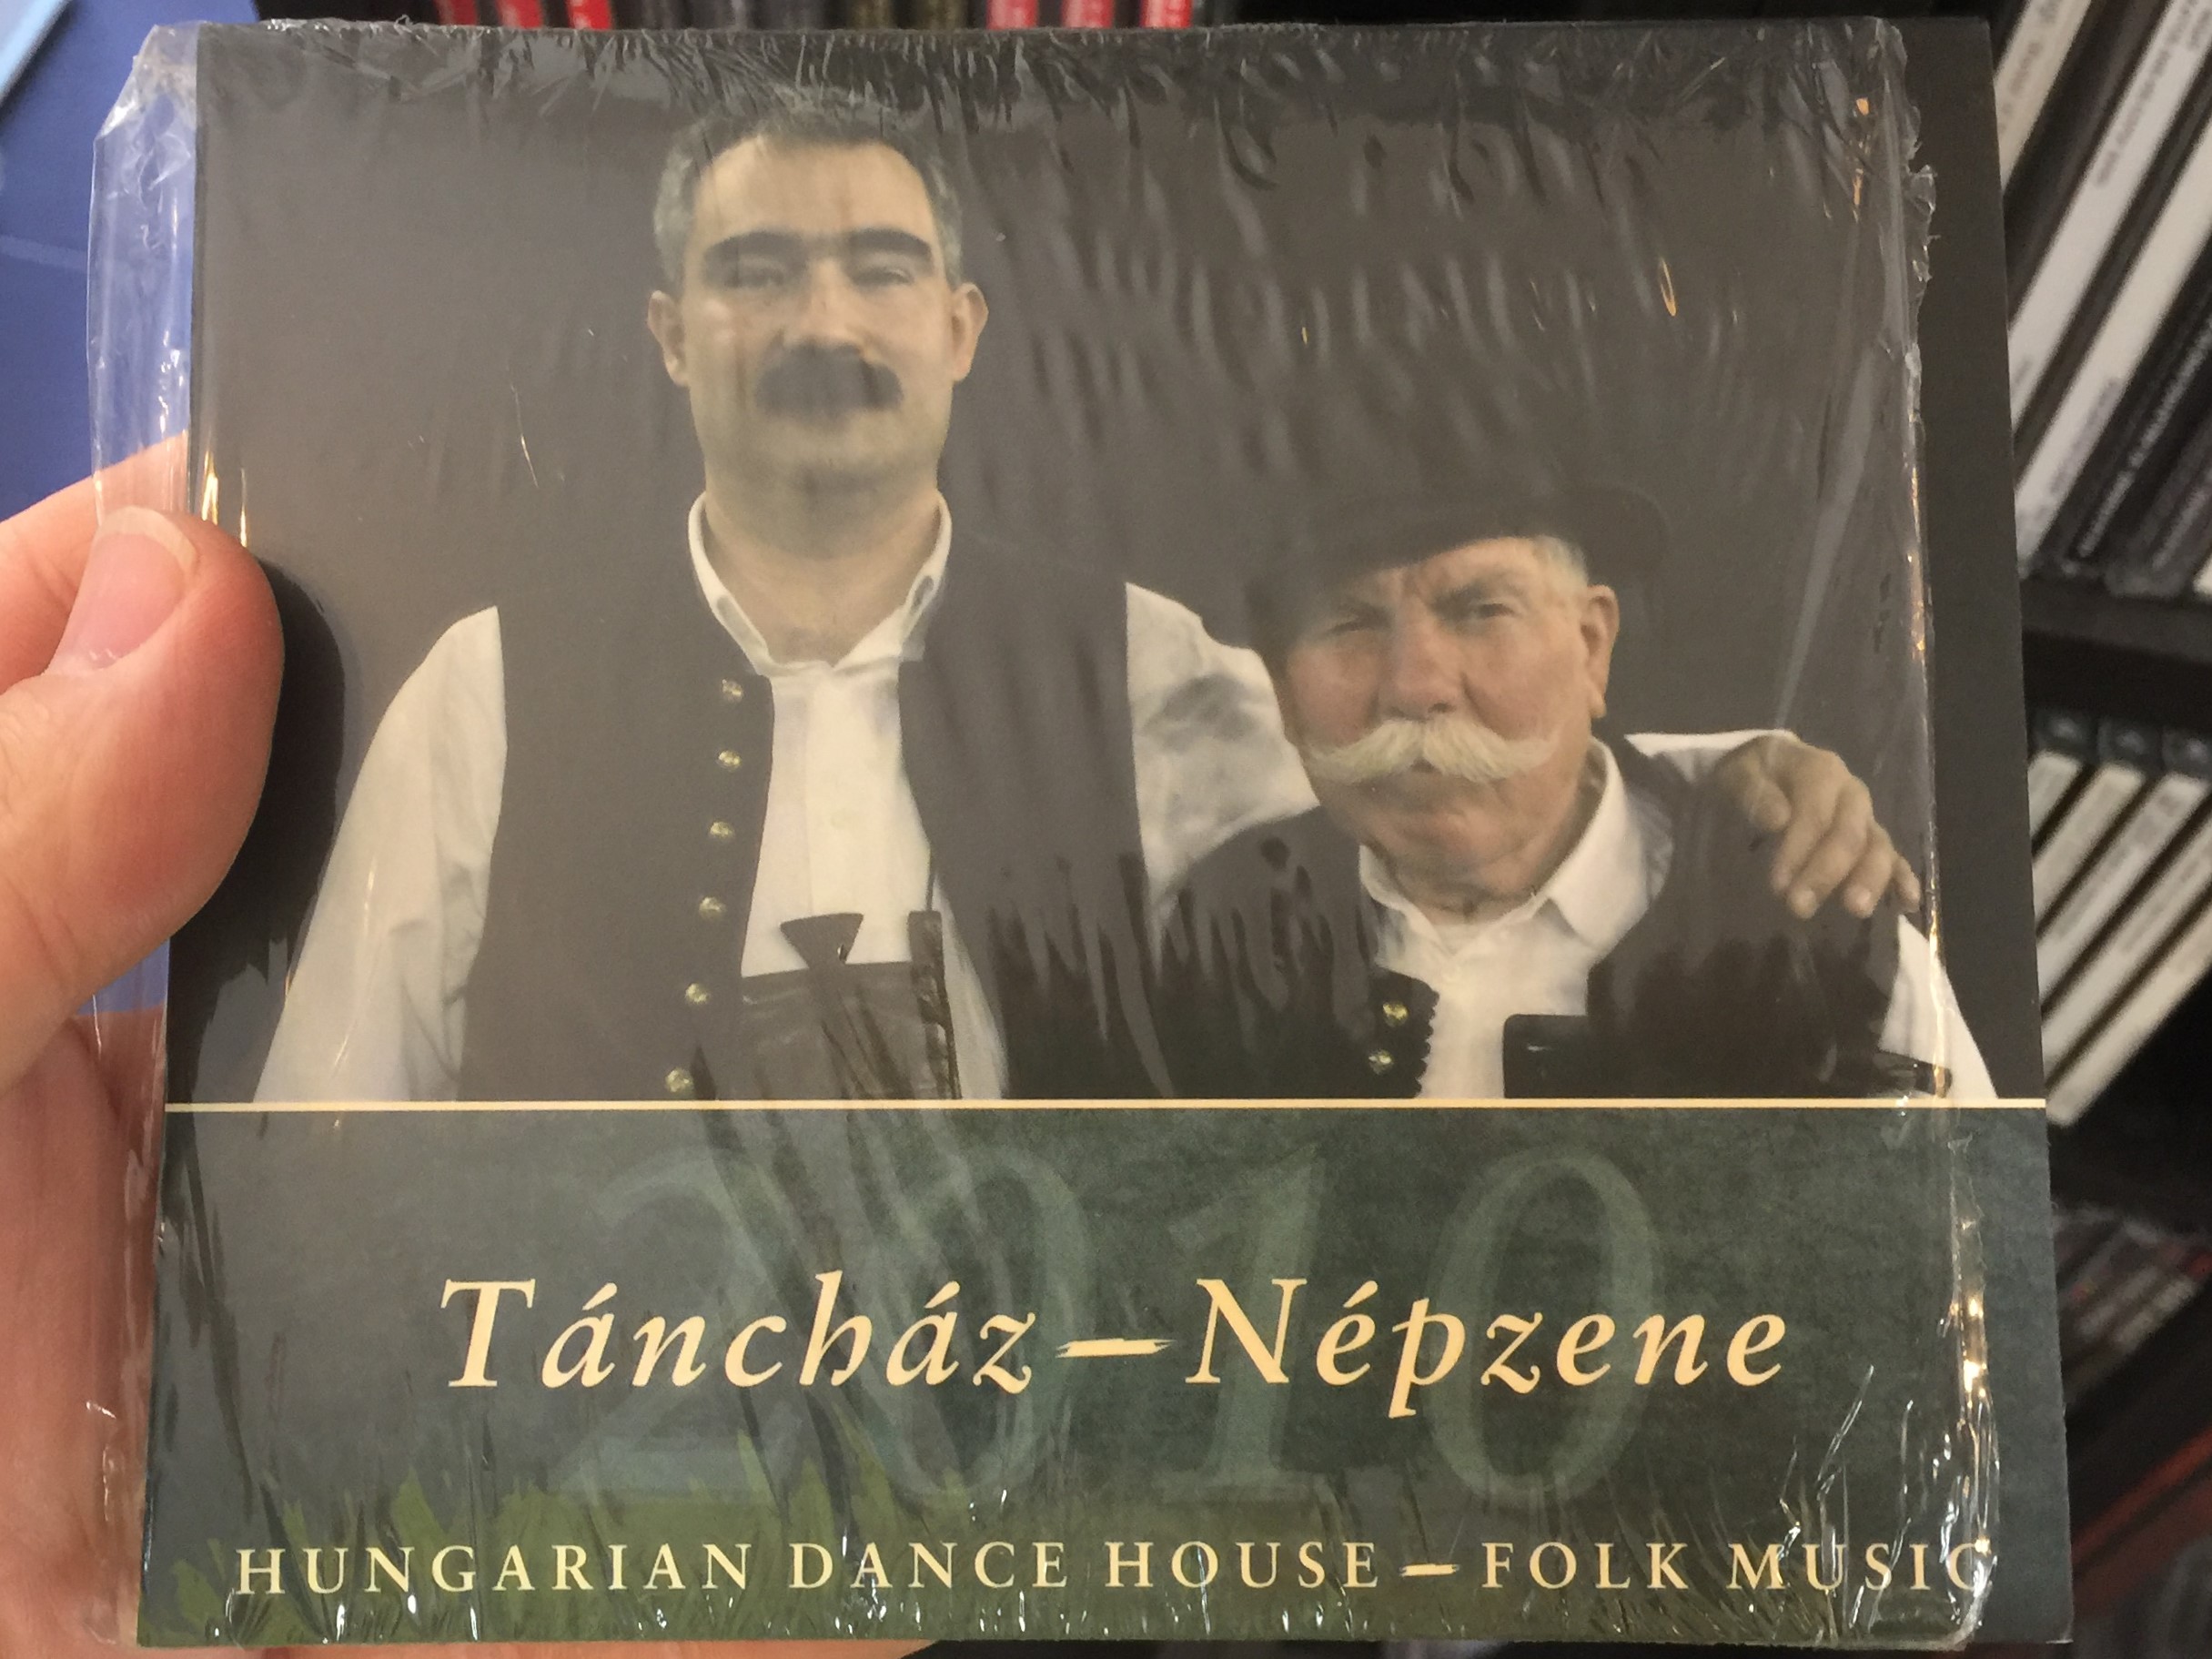 t-nch-z-n-pzene-2010-hungarian-dance-house-folk-music-hagyom-nyok-h-za-audio-cd-2010-5999882041520-1-.jpg